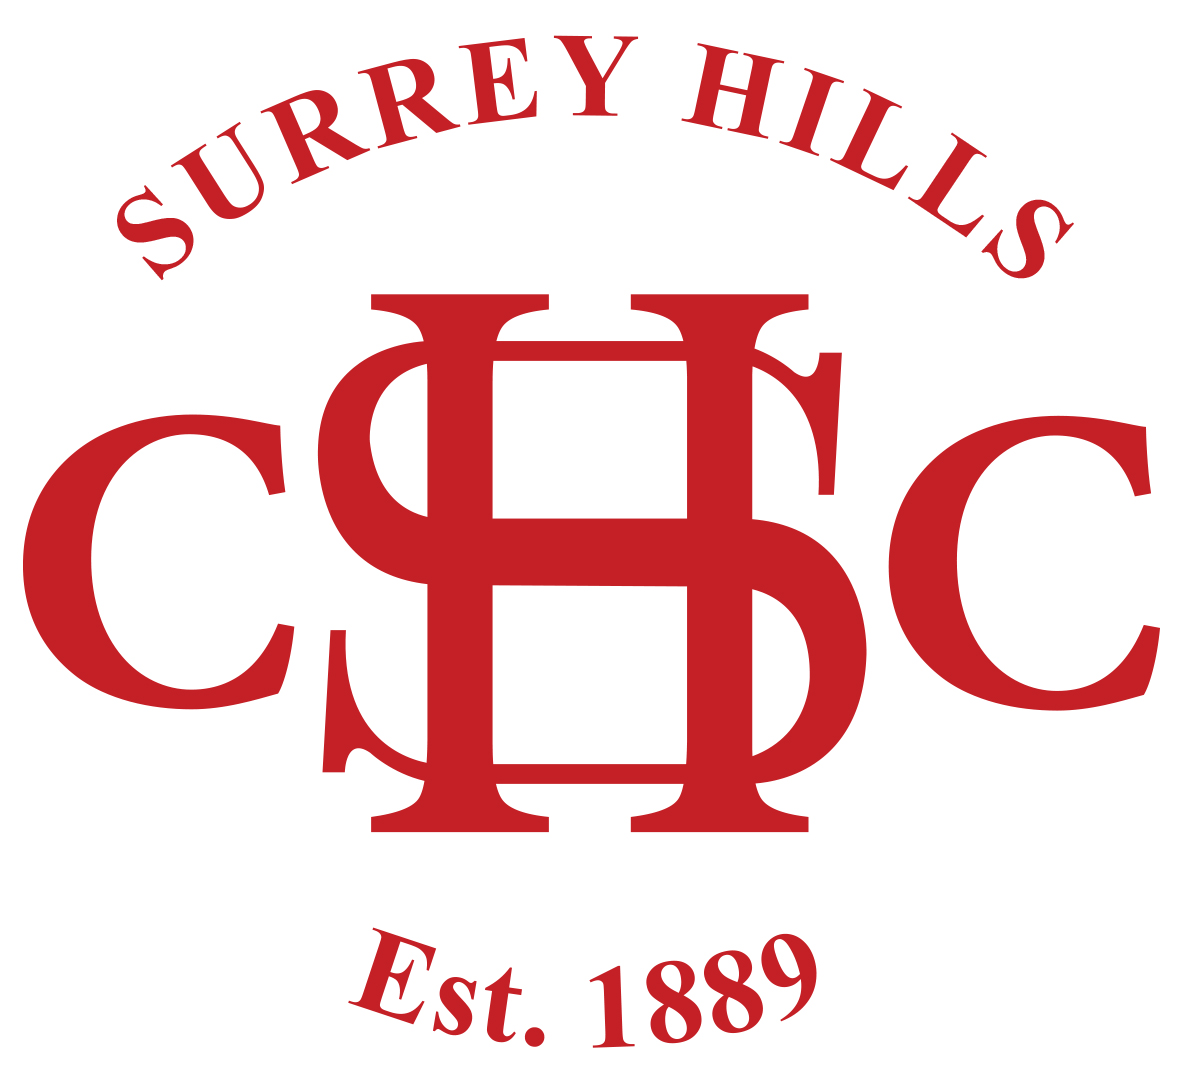 Surrey Hills Cricket Club